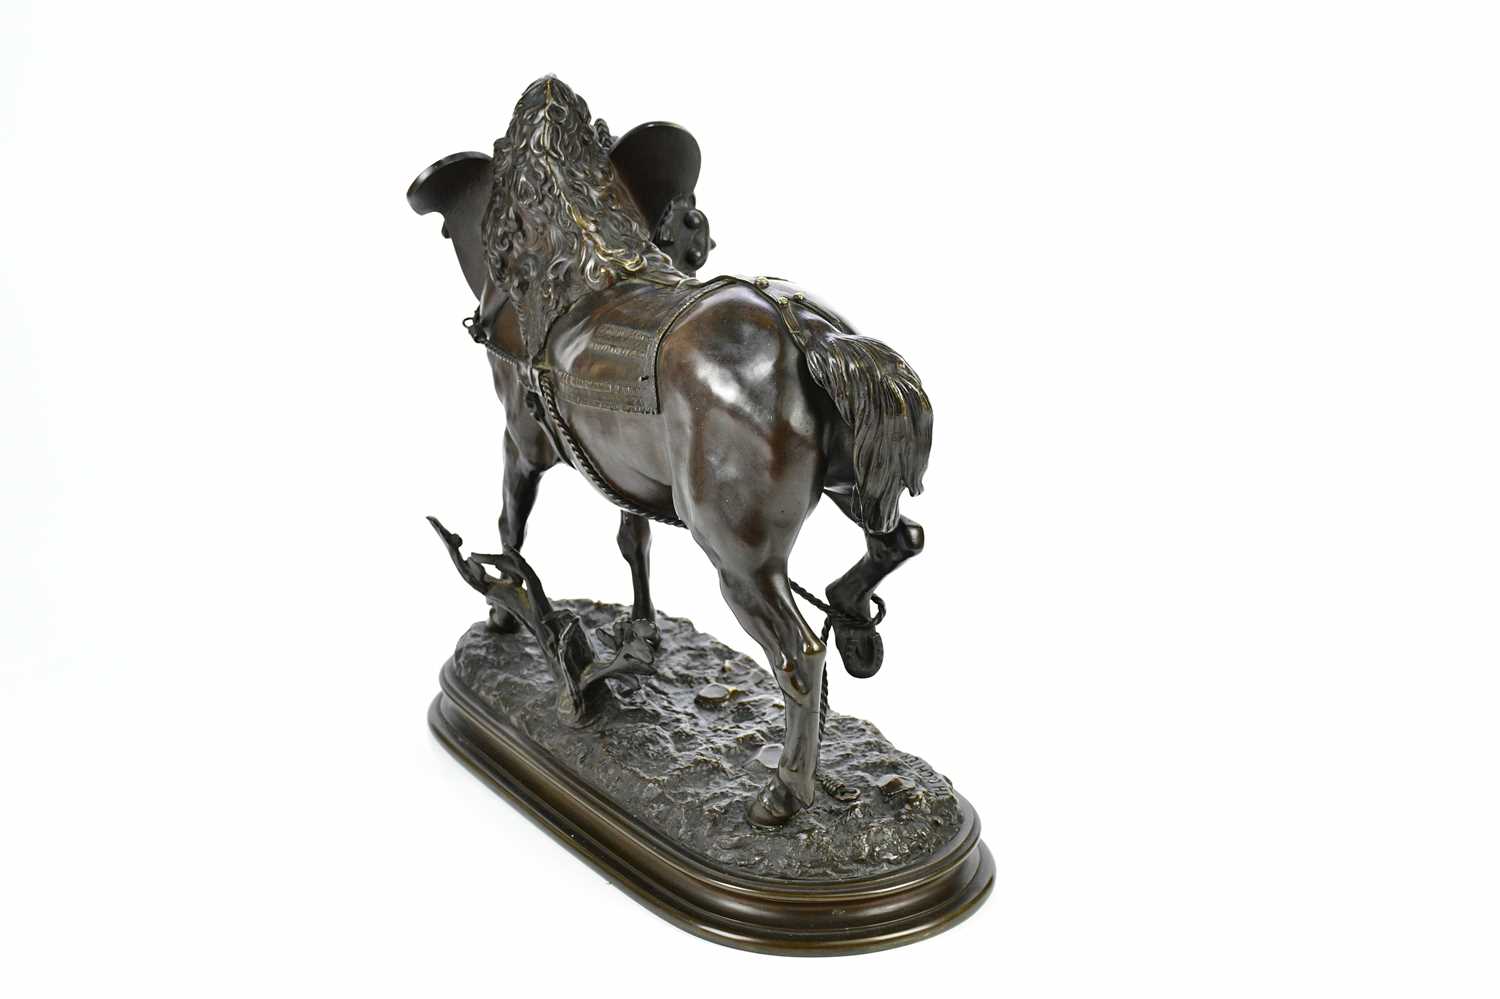 T H GECHTER; a bronze figure of a horse, on plinth base, height 40cm. - Image 4 of 6